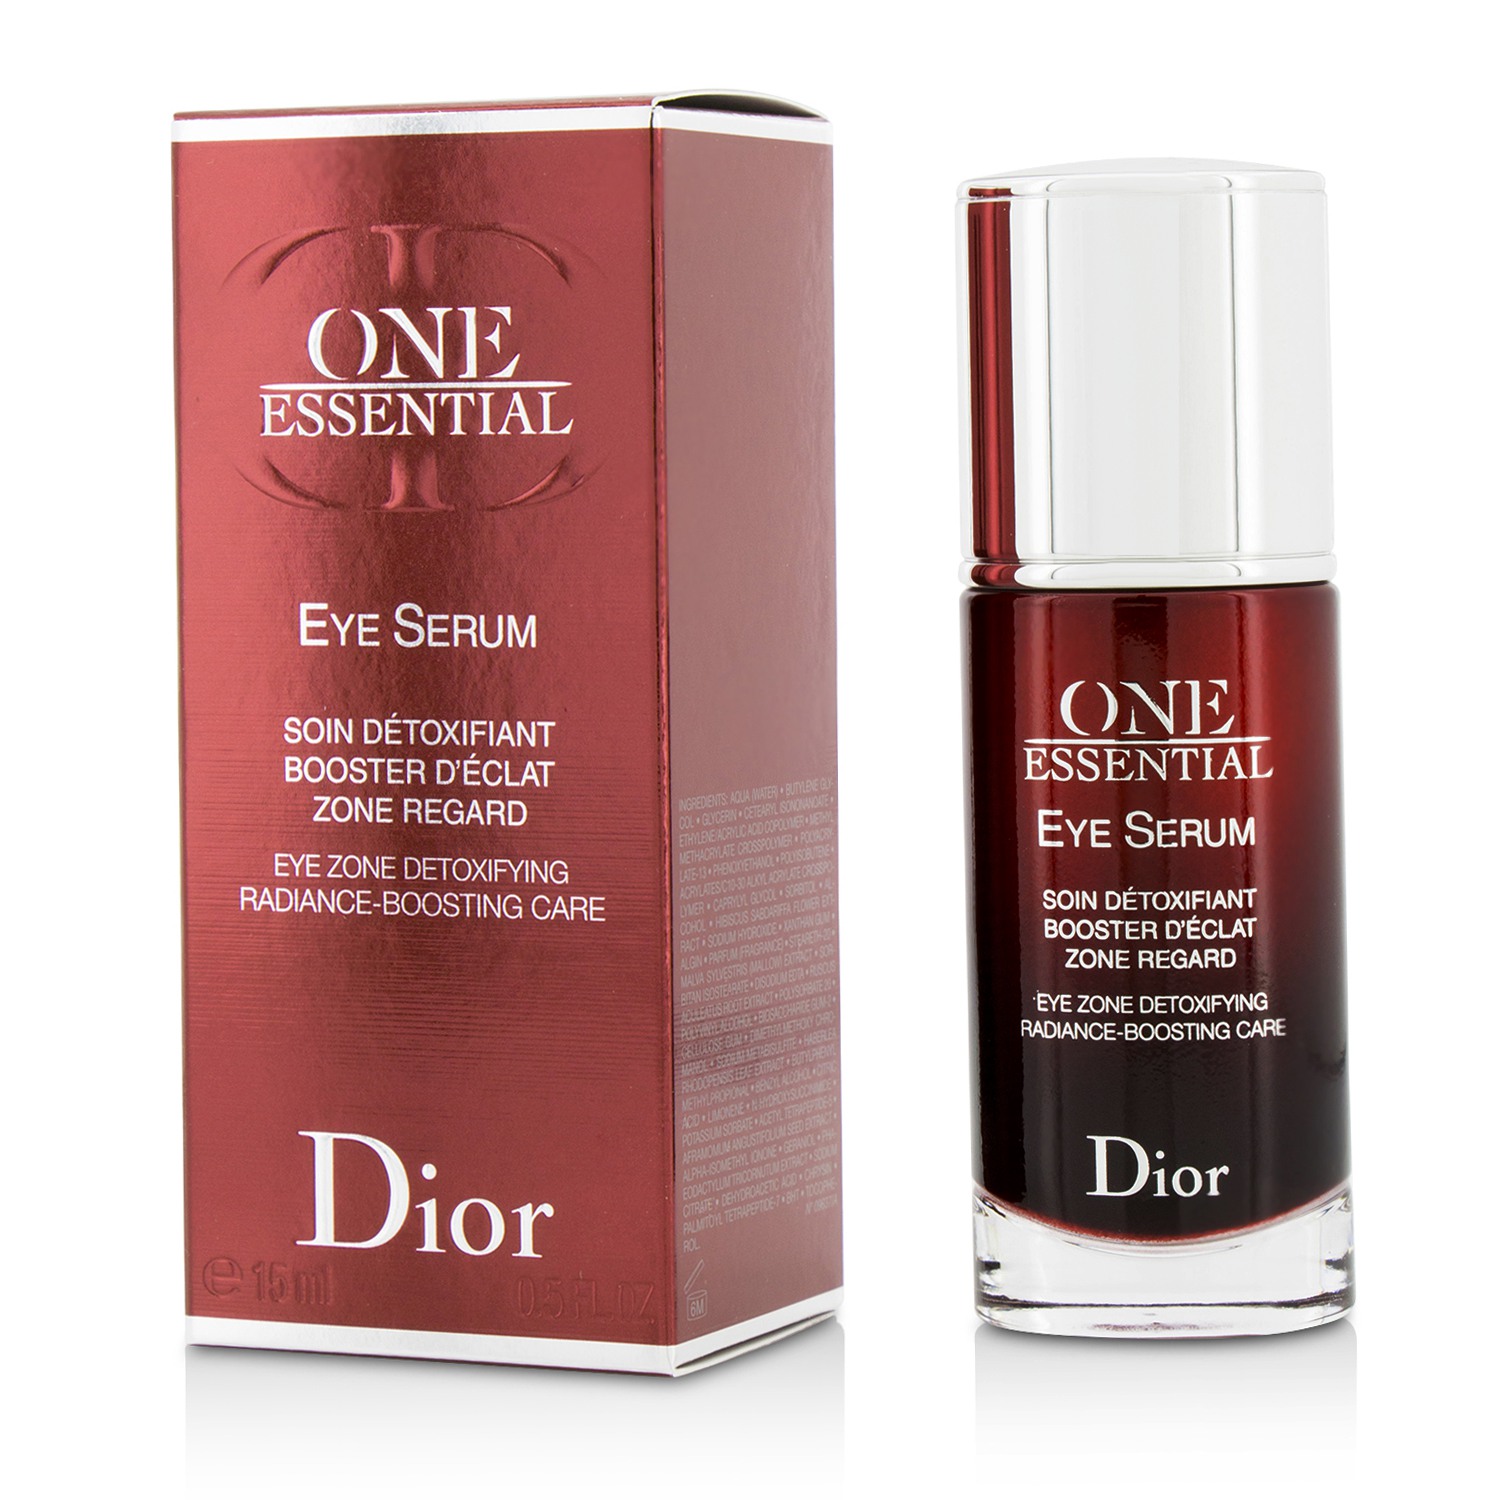 One Essential Eye Serum Eye Zone Detoxifying Radiance-Boosting Care Christian Dior Image